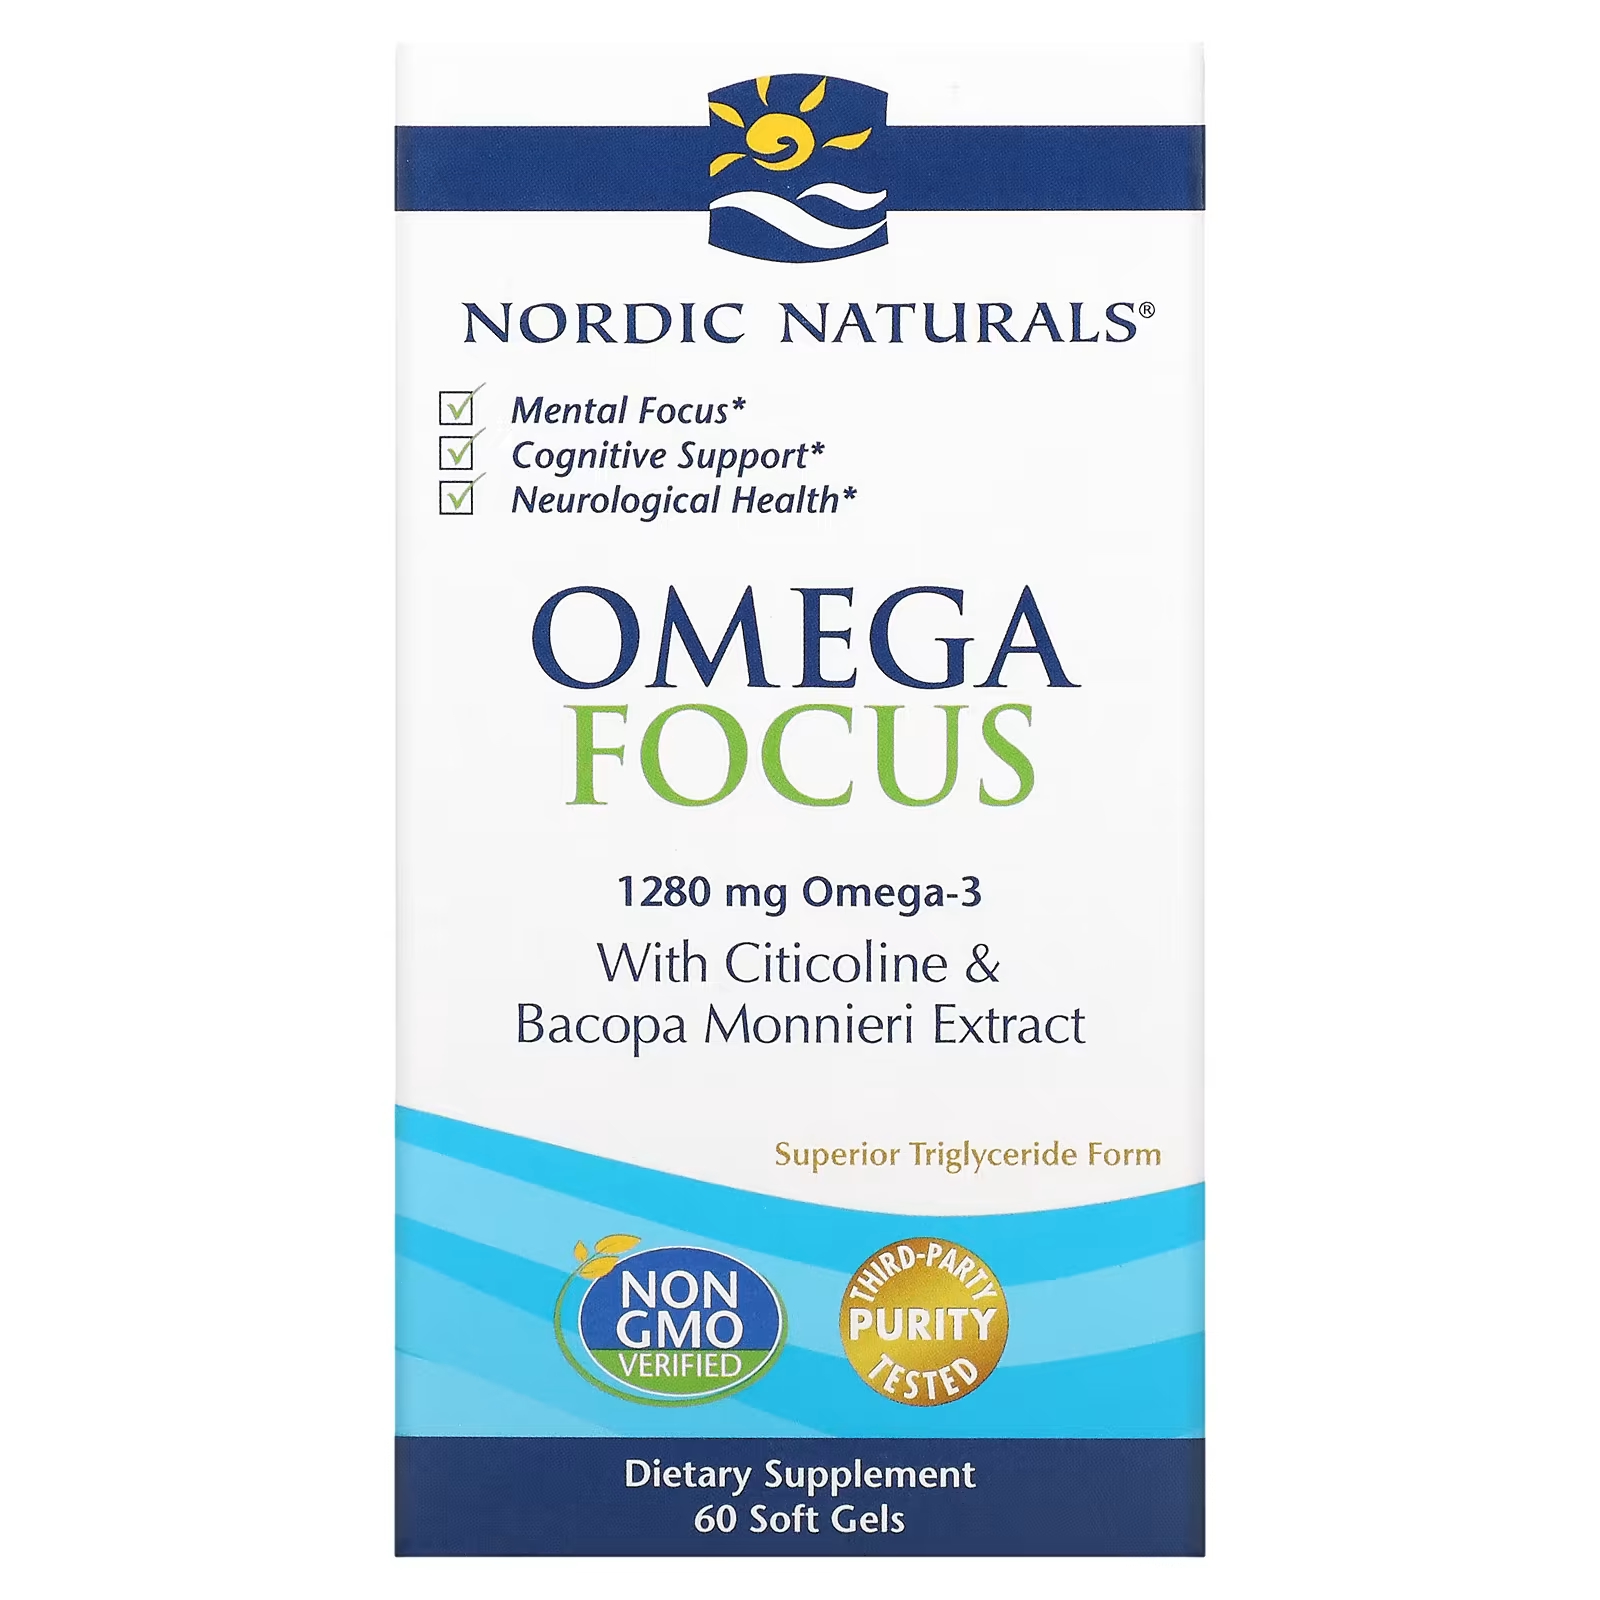 Nordic Naturals Omega Focus 1280 мг, 60 мягких таблеток (640 мг на мягкую гель) ultimate omega lemon 1280 мг 60 мягких таблеток 640 мг на мягкую желатиновую таблетку nordic naturals